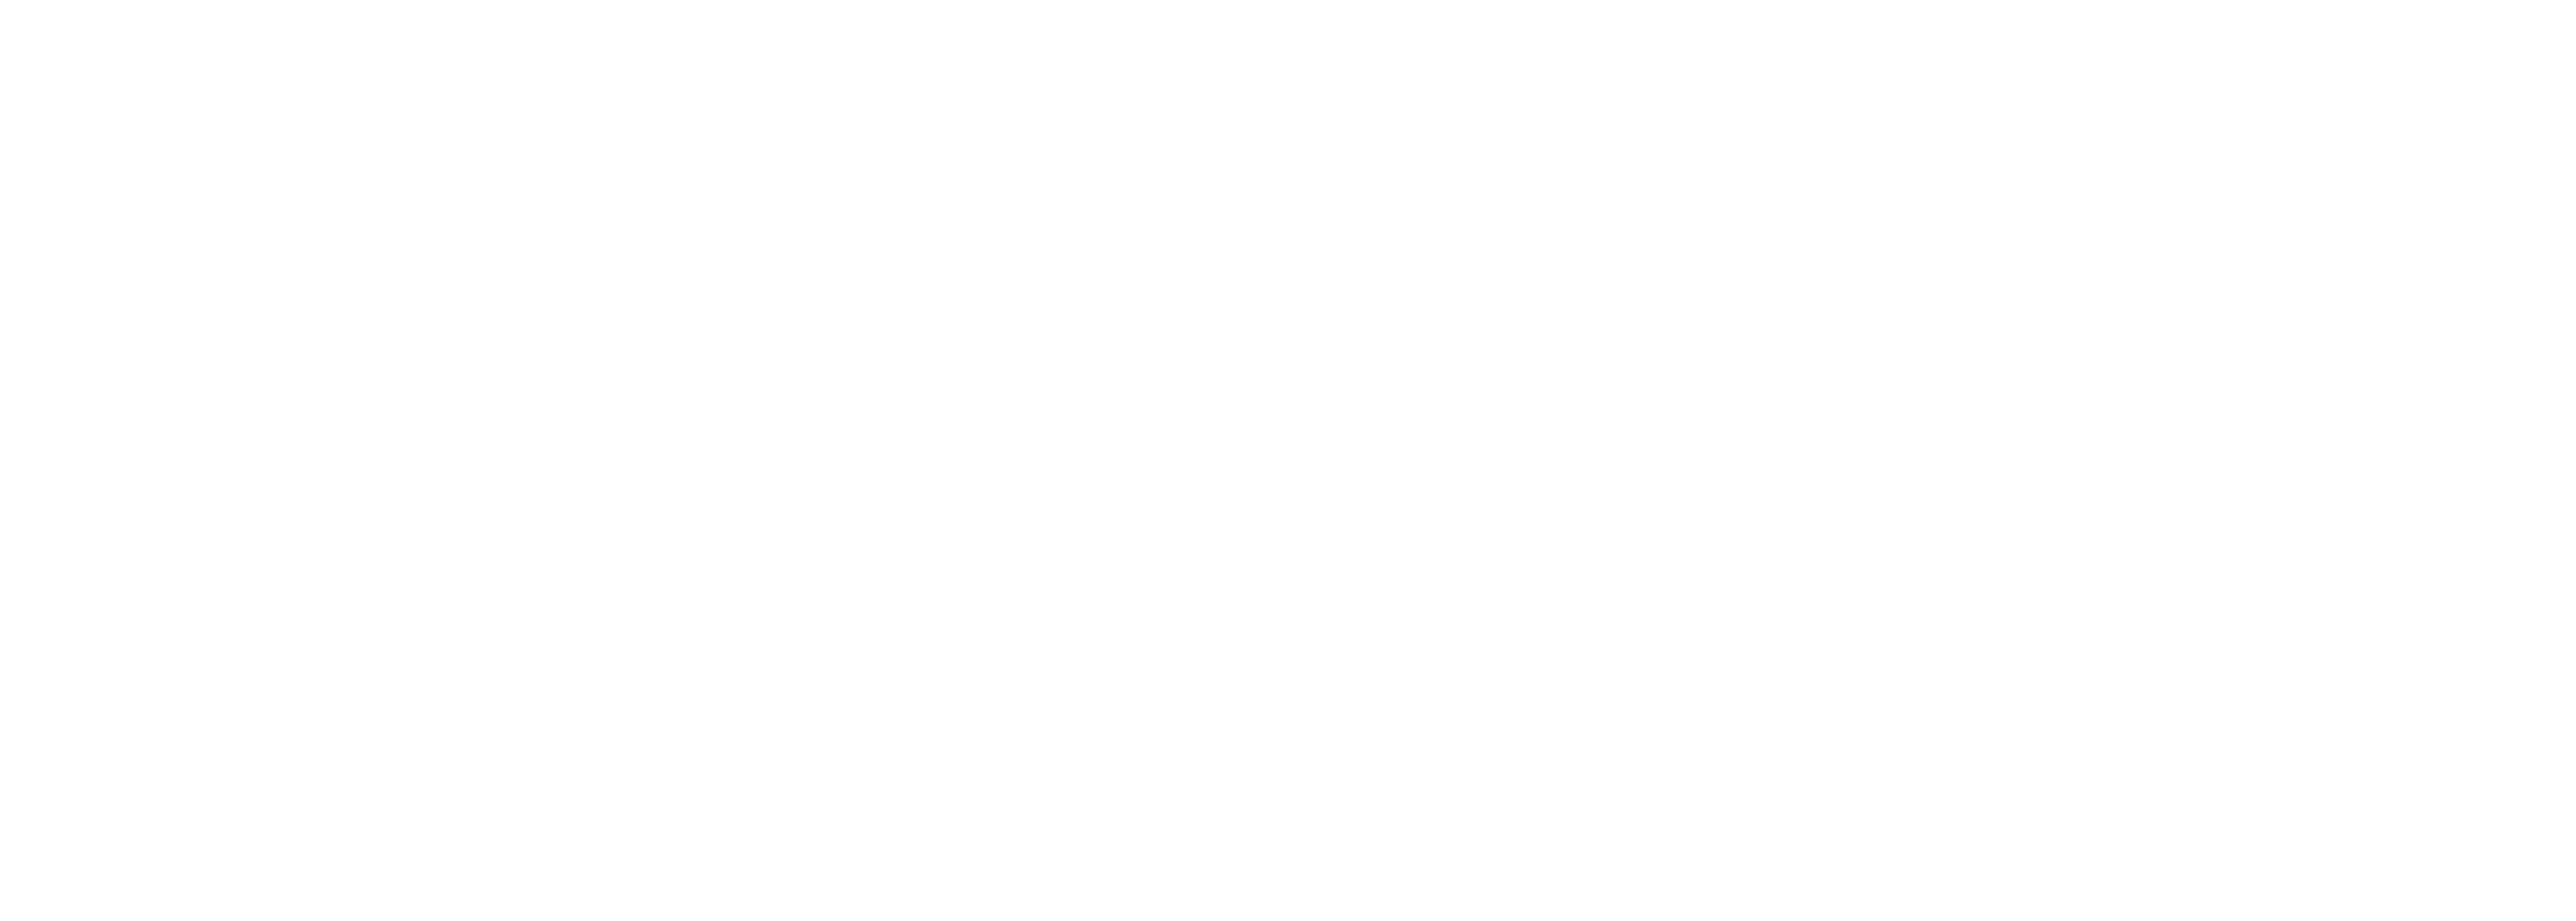 Magellan Learning Solutions Logo_White